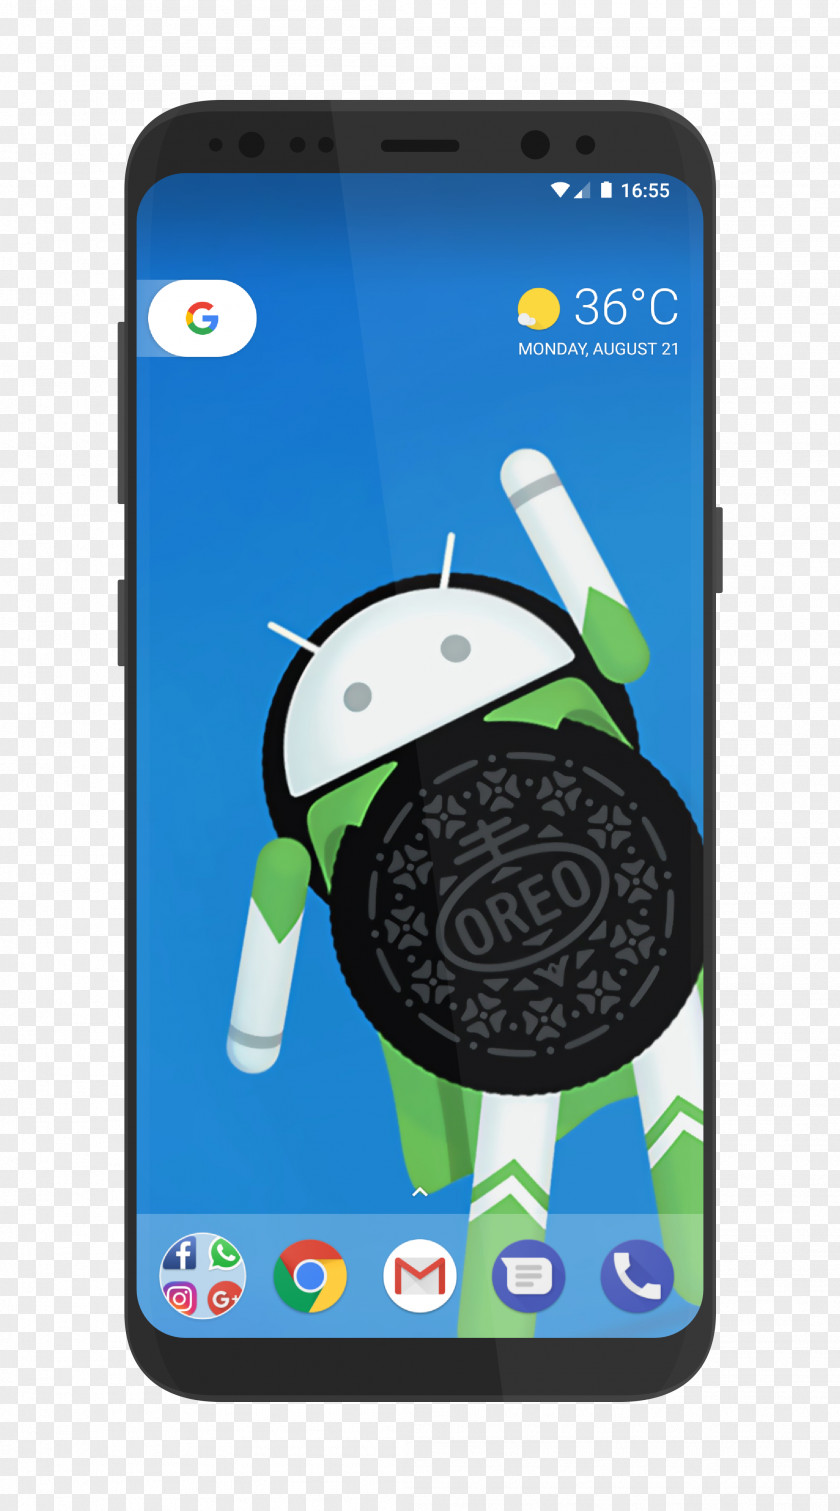 Android Oreo Smartphone Desktop Wallpaper PNG